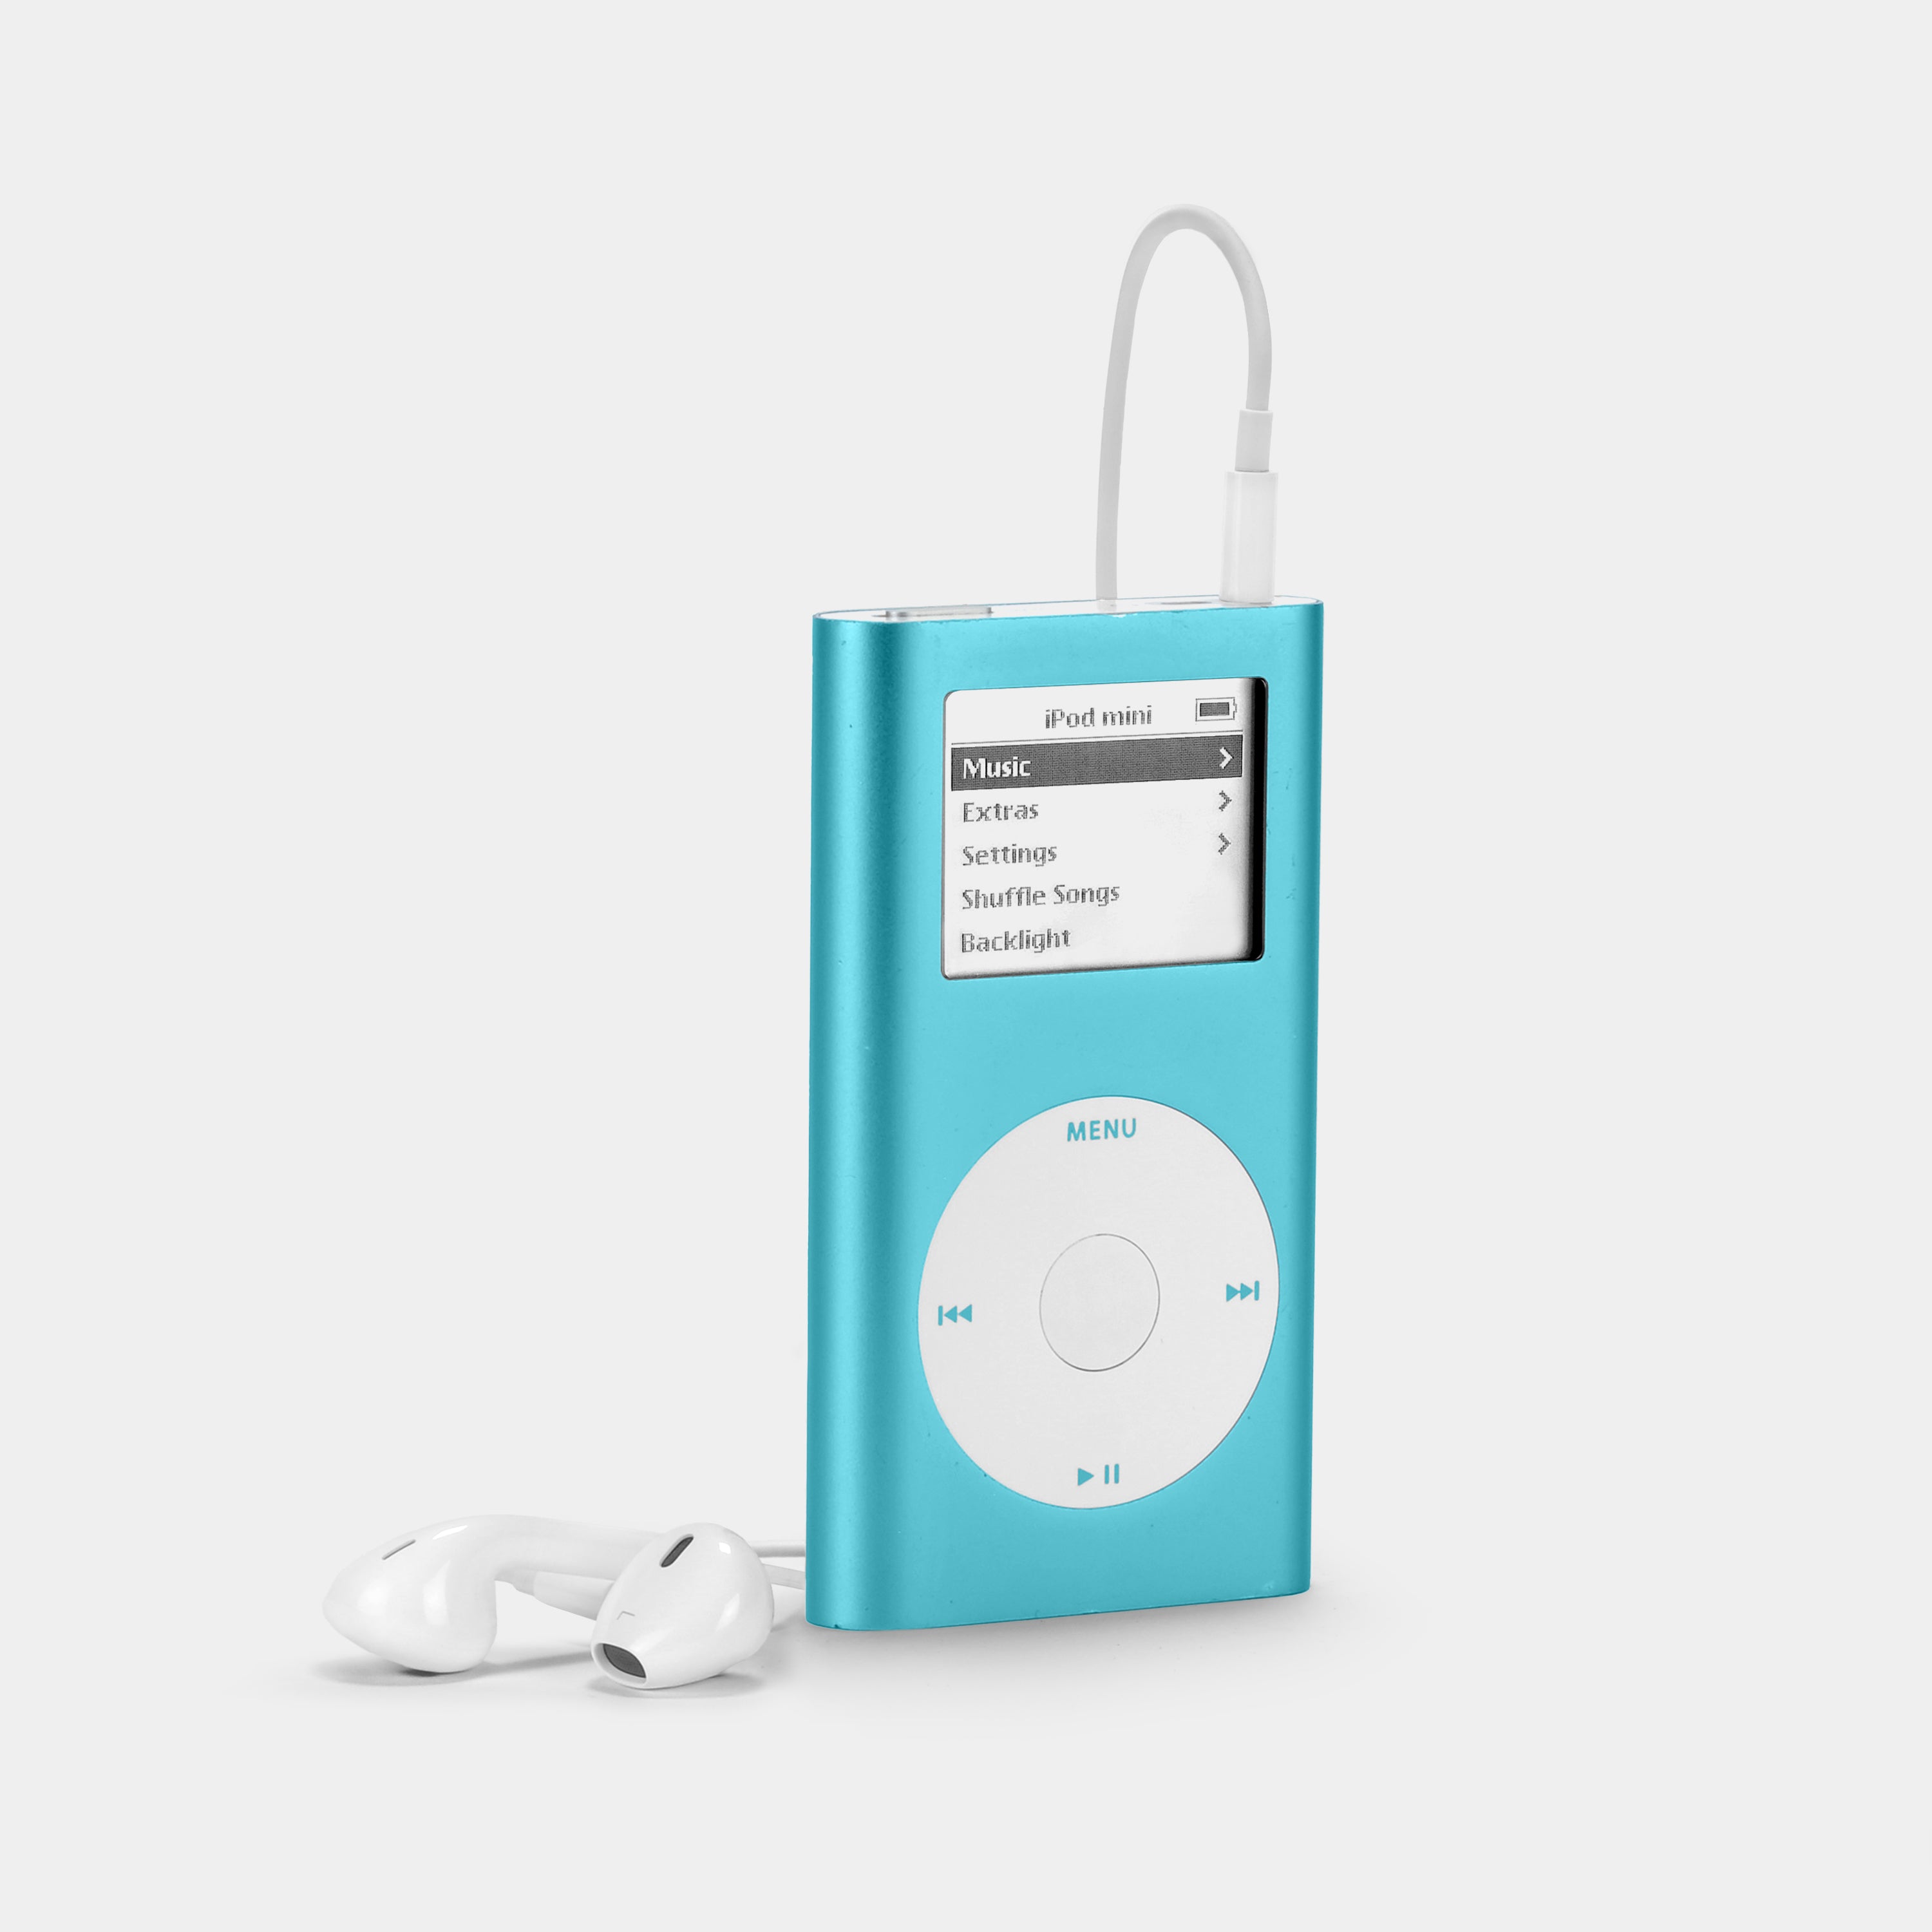 Apple iPod Mini (2nd Generation) MP3 Player